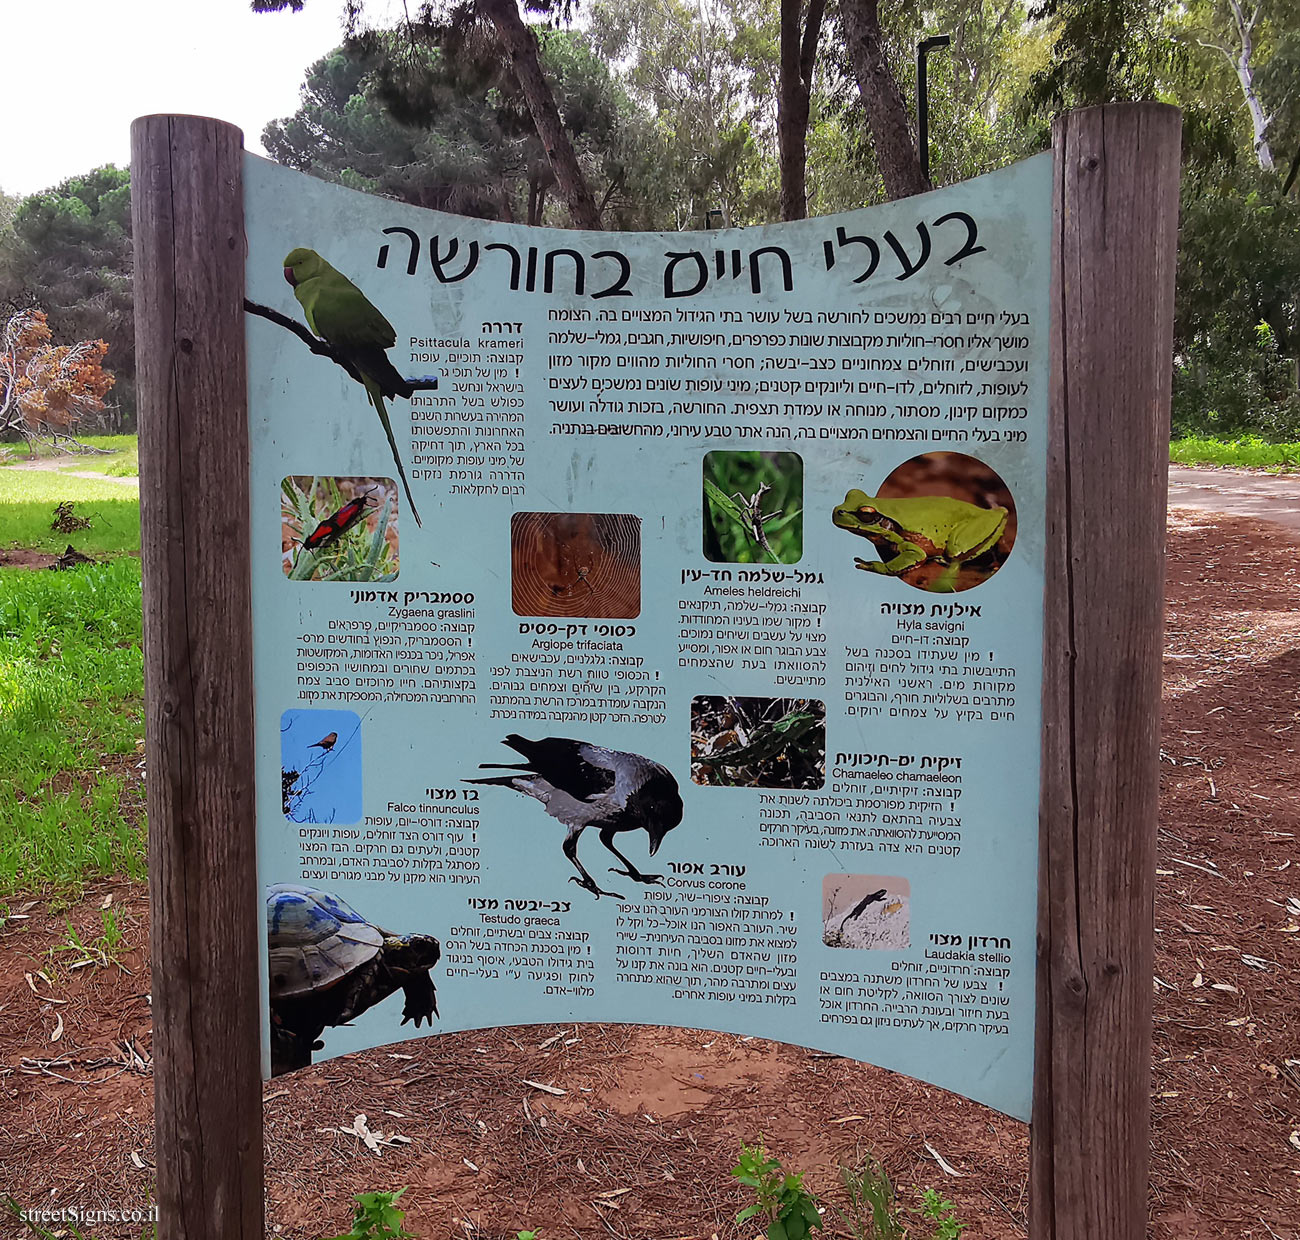 Netanya - Sergeant’s Grove - Animals in the grove